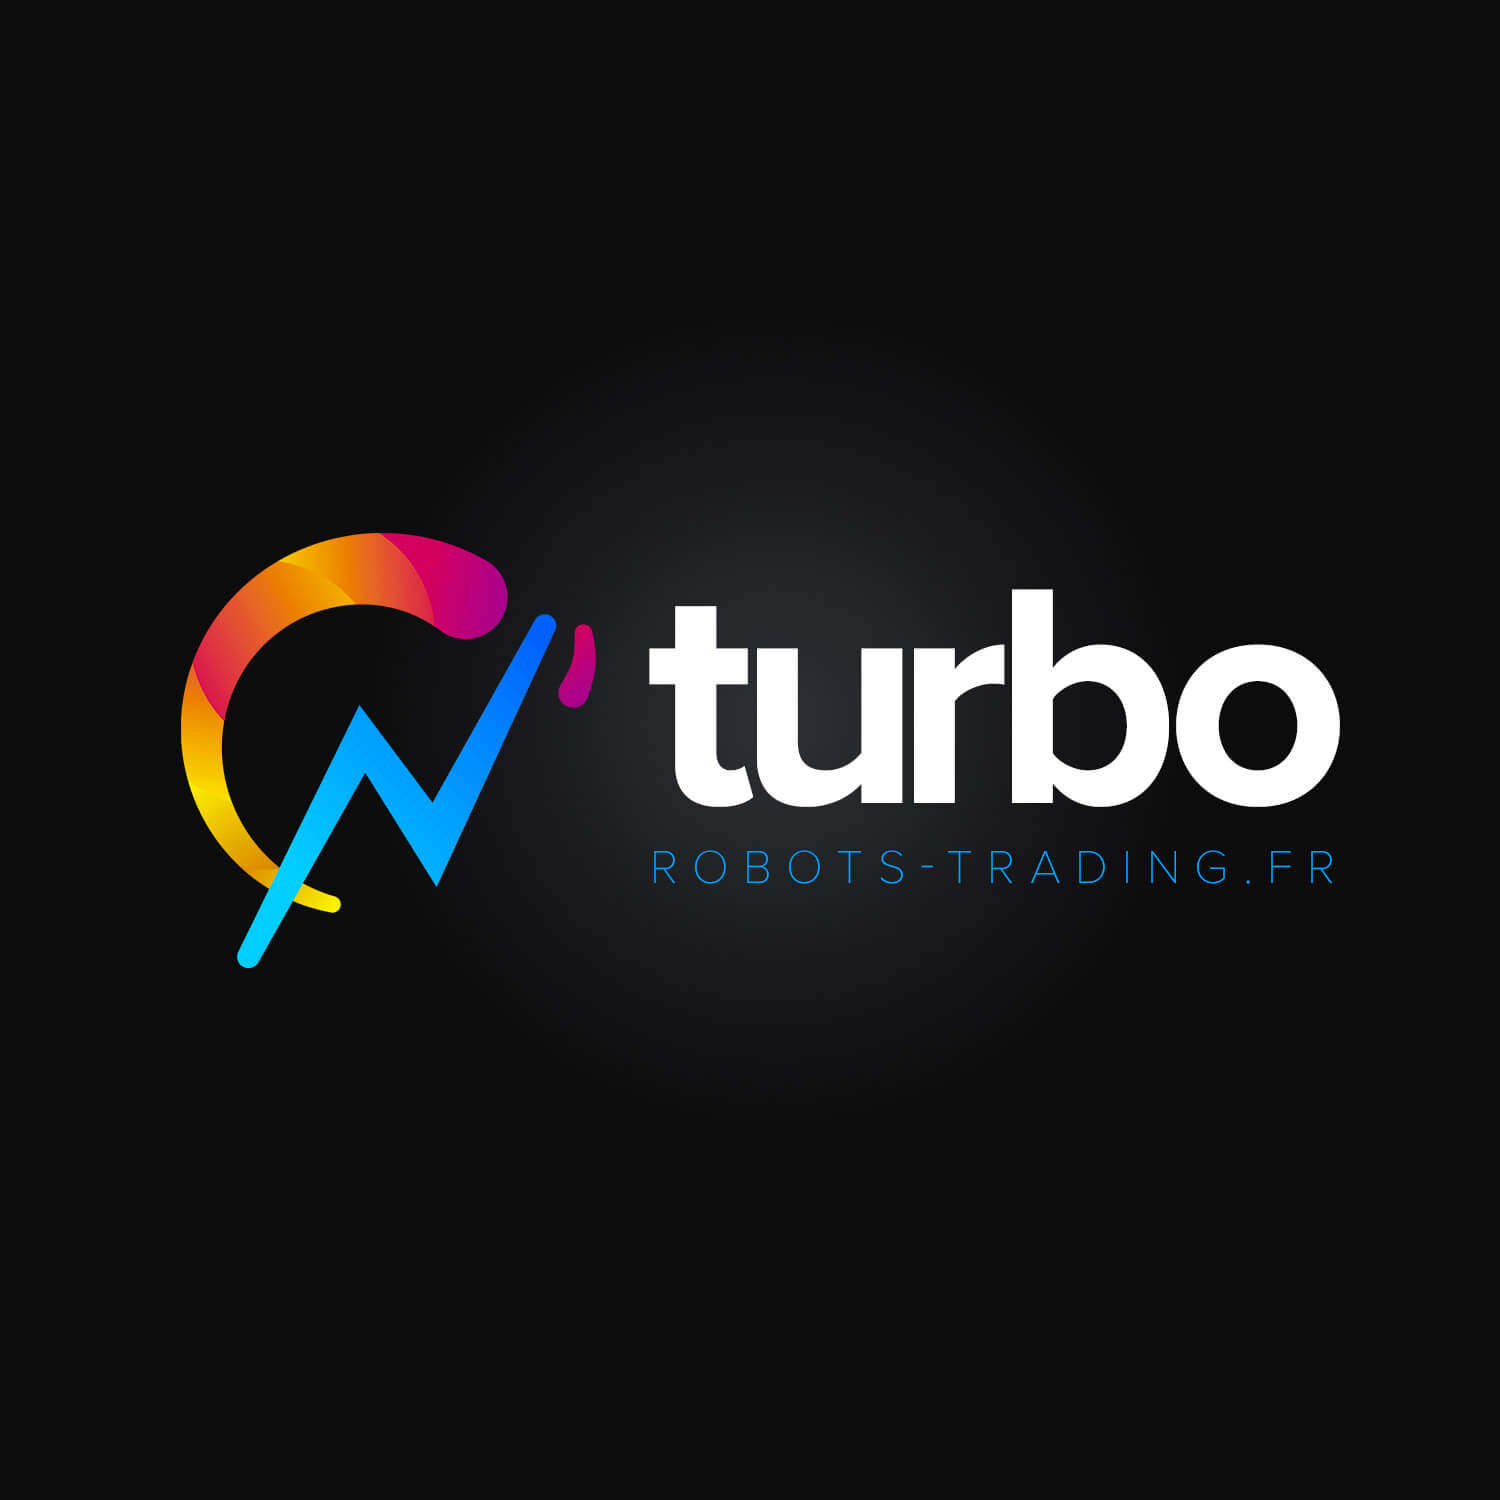 turbobot forex trading